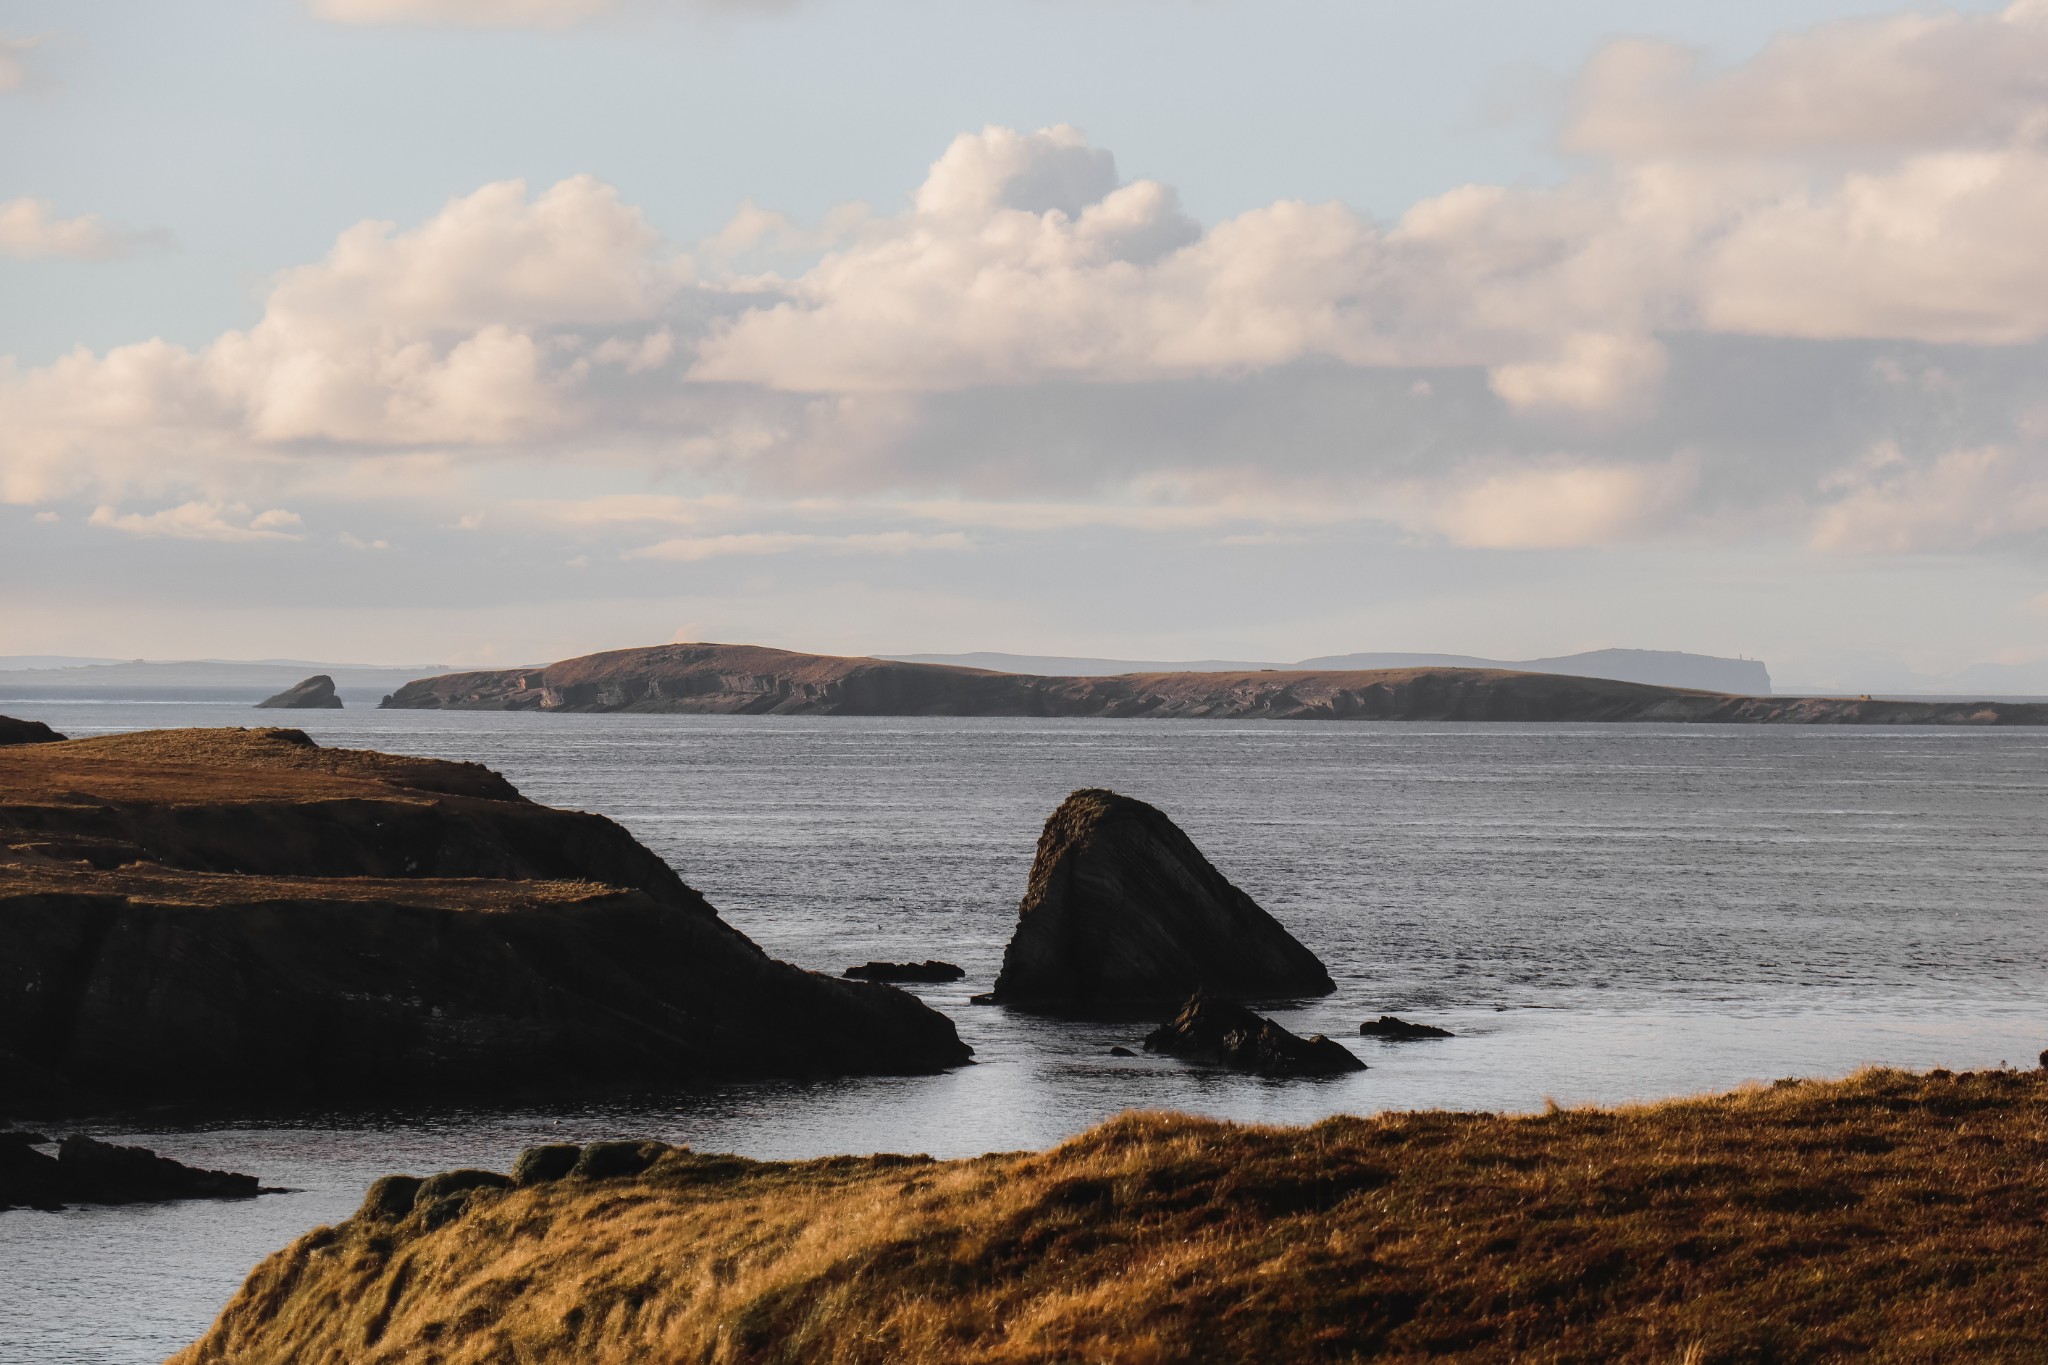 Looking towards the uninhabited island of Swona, with the Scottish mainland beyond.